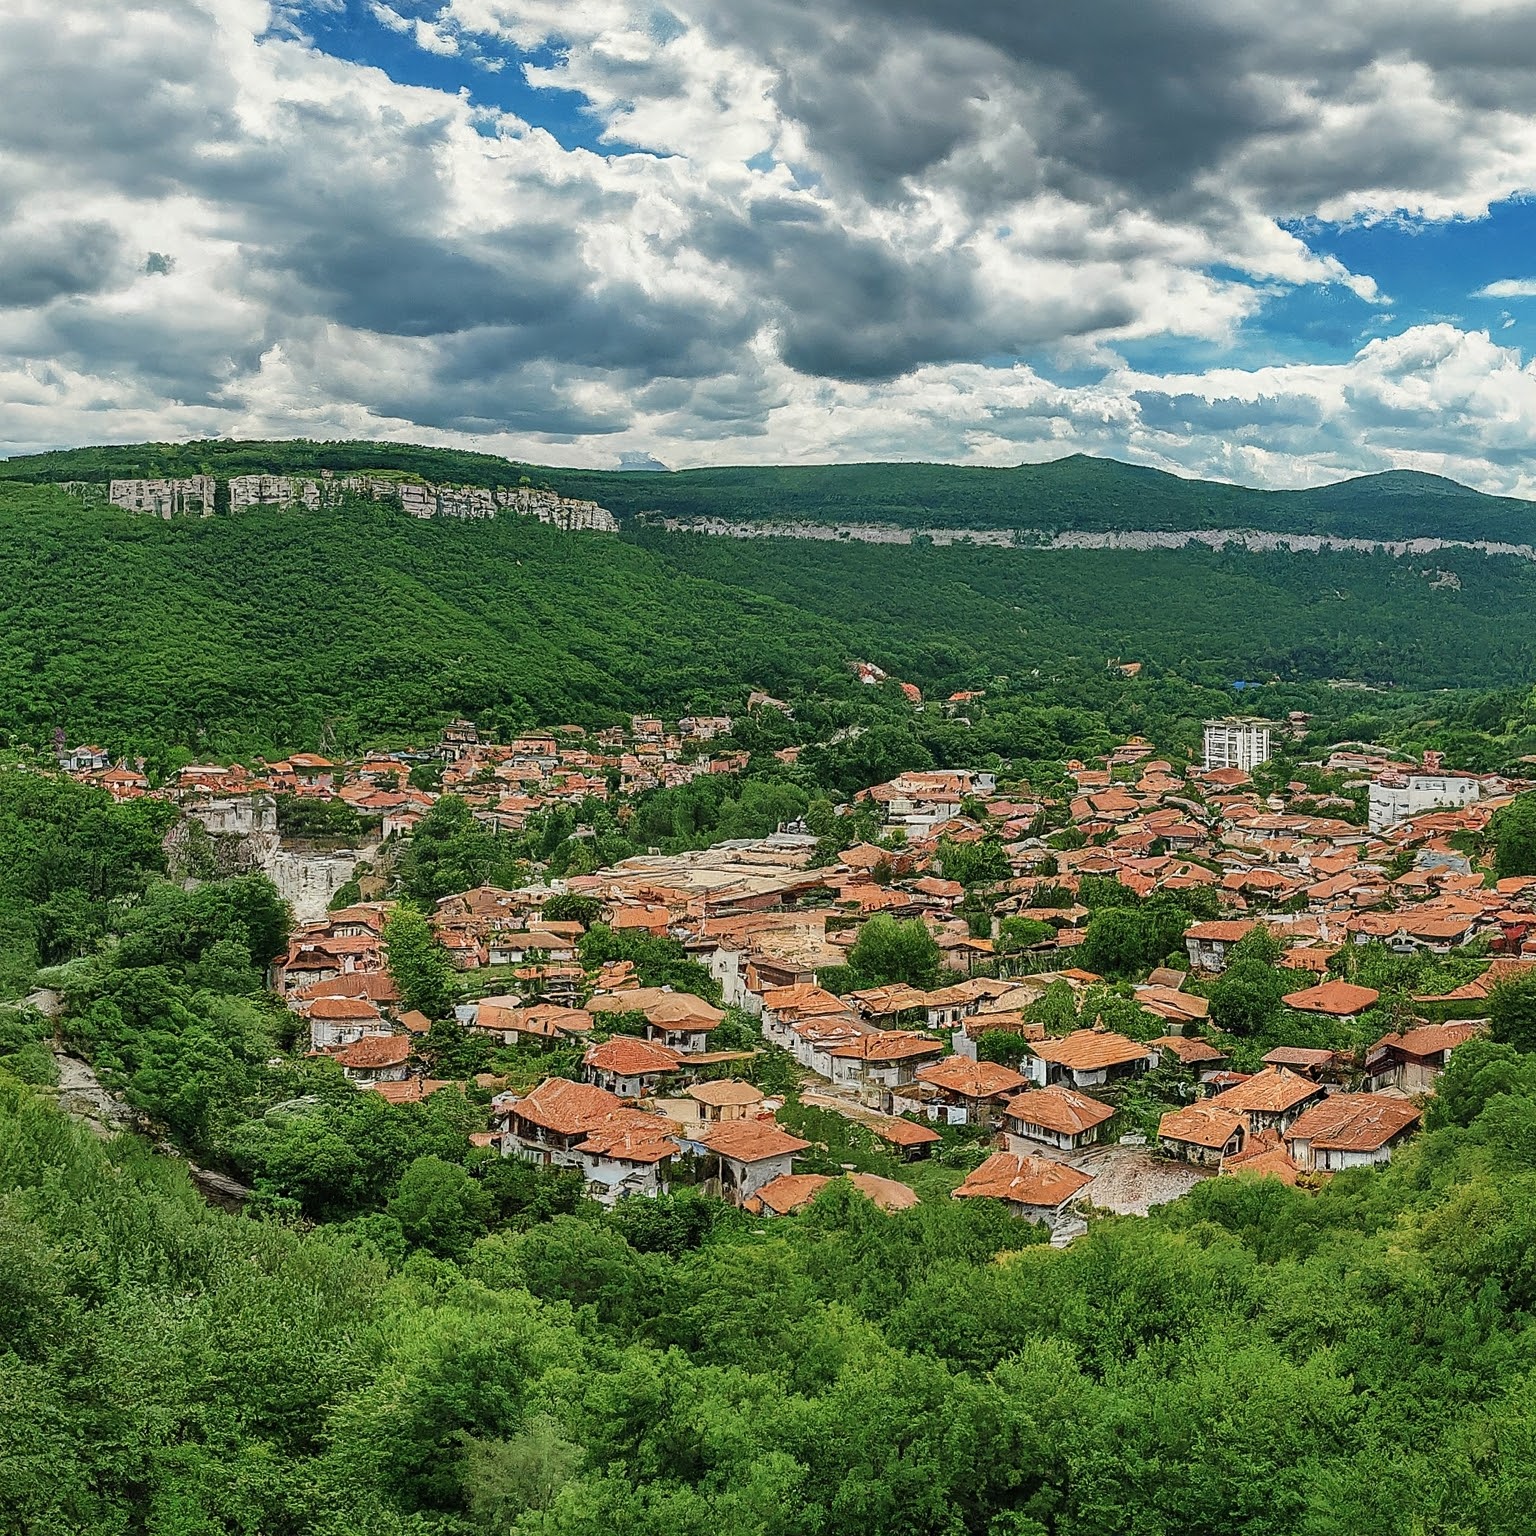 Panoramic view of Tryavna, Bulgaria, nestled in the Balkan Mountains.